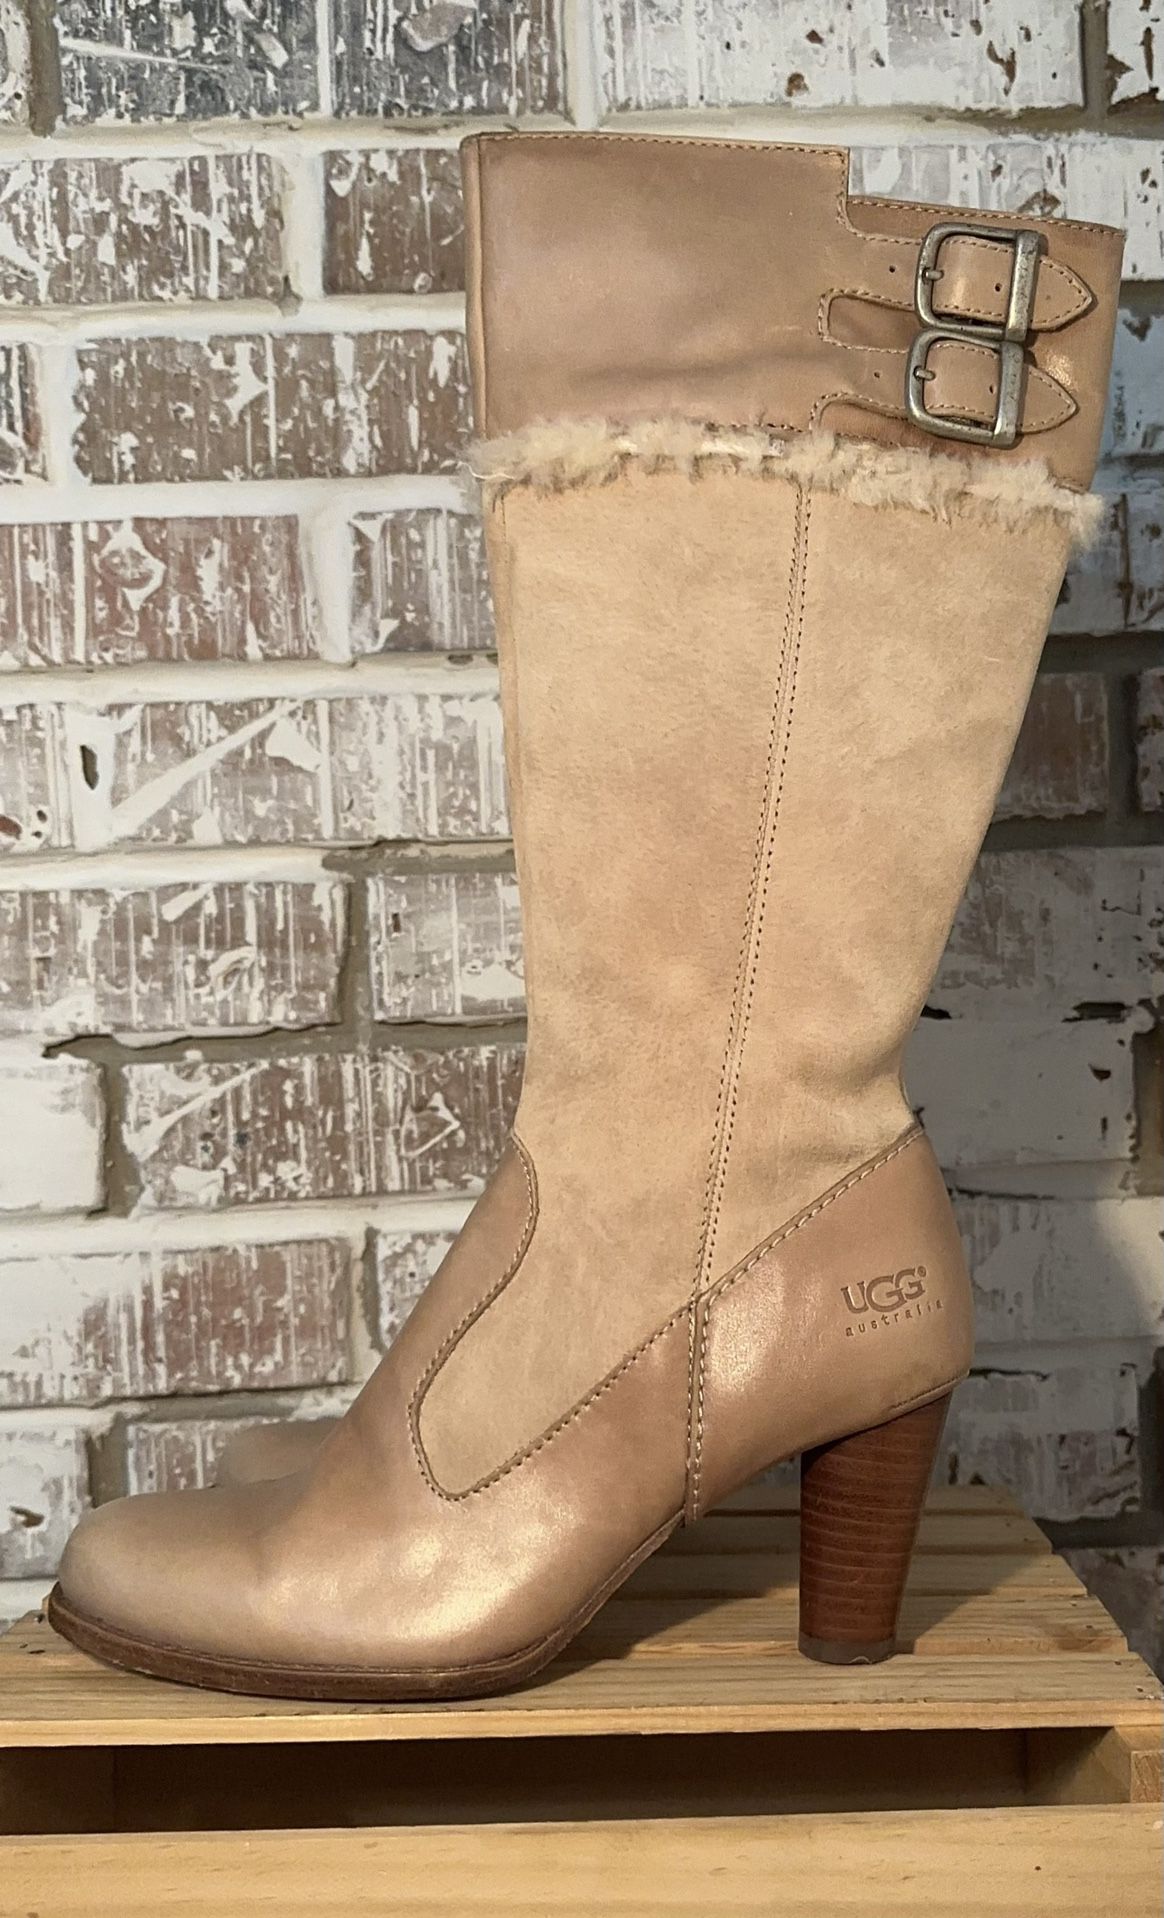 UGG Heel Boots Leather Suede & Sheepskin Size 7.5 Women’s Beige W/Buckle Zip